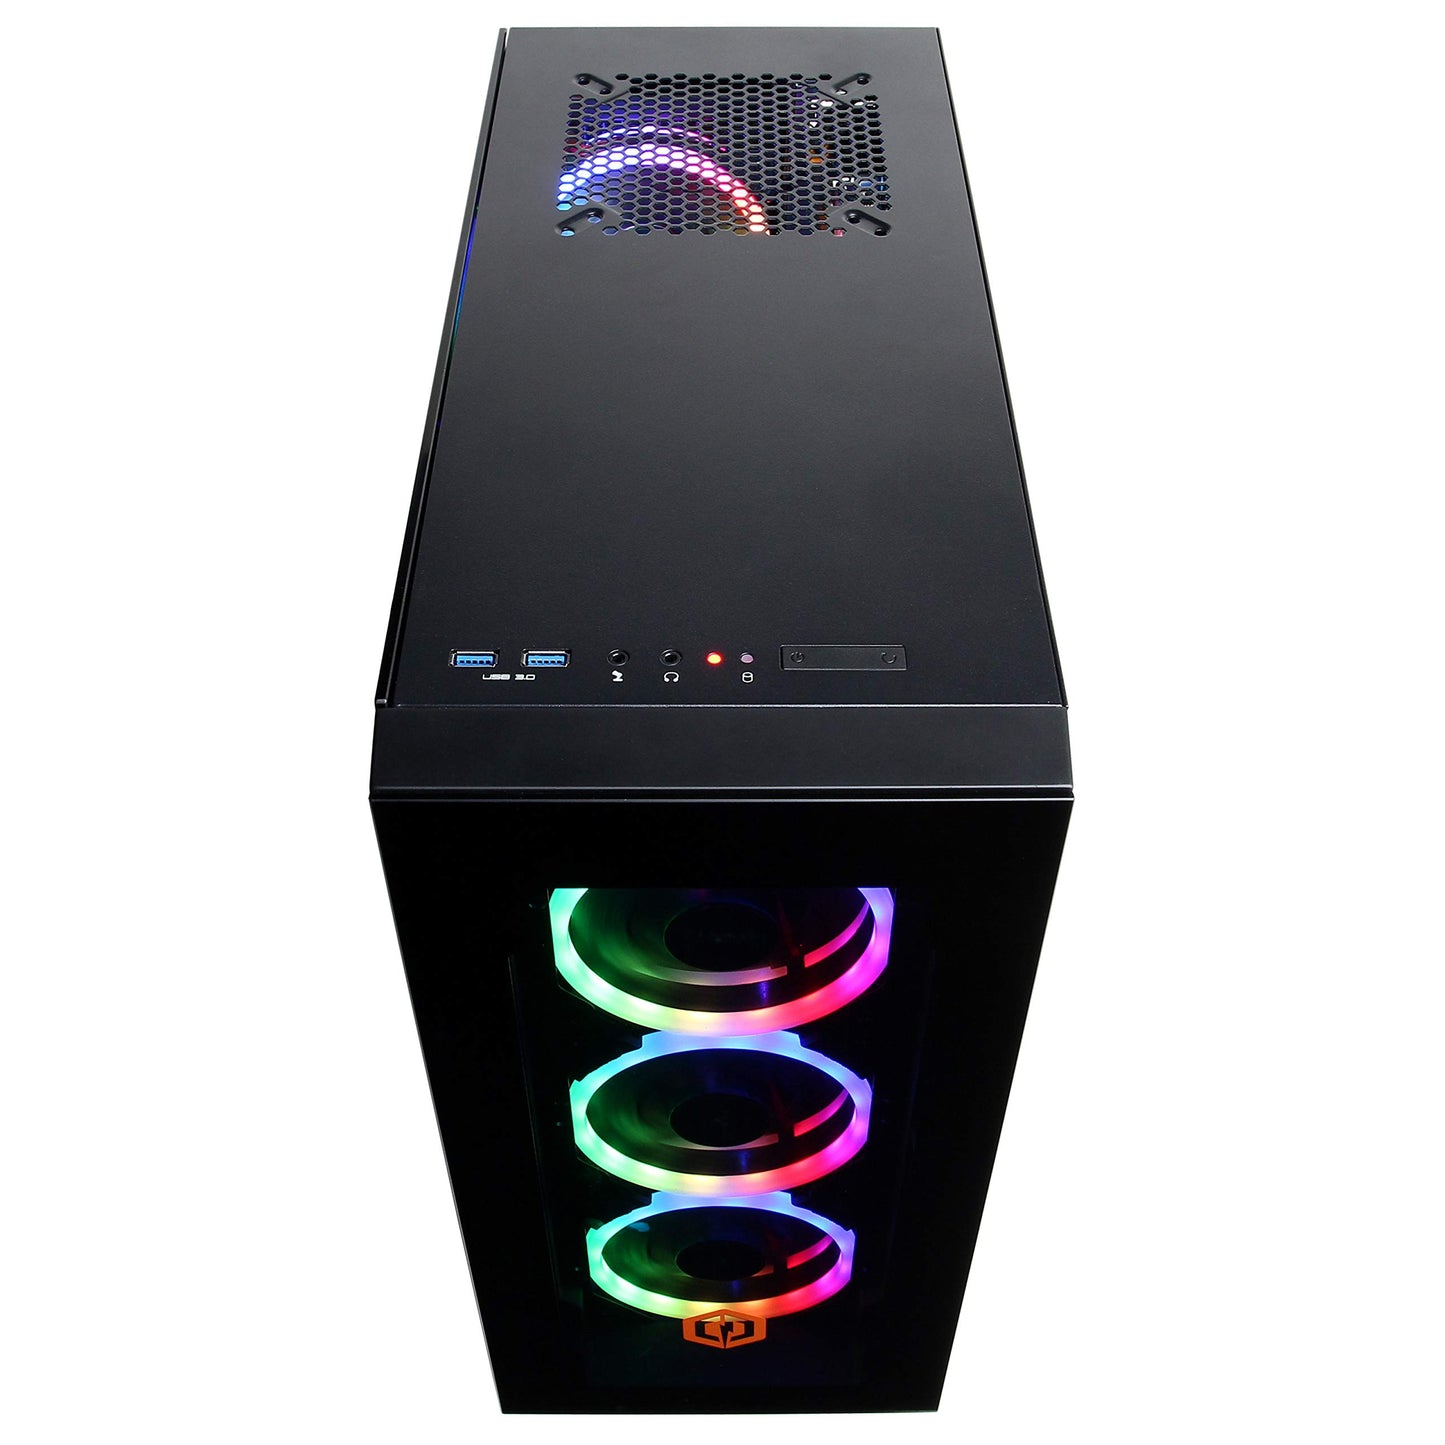 CyberpowerPC Gamer Xtreme VR Gaming PC, Intel Core i7-12700F 2.1GHz, GeForce RTX 3060 12GB, 16GB DDR4, 1TB NVMe SSD, WiFi & Win 11 Home (GXiVR8040A12), Black